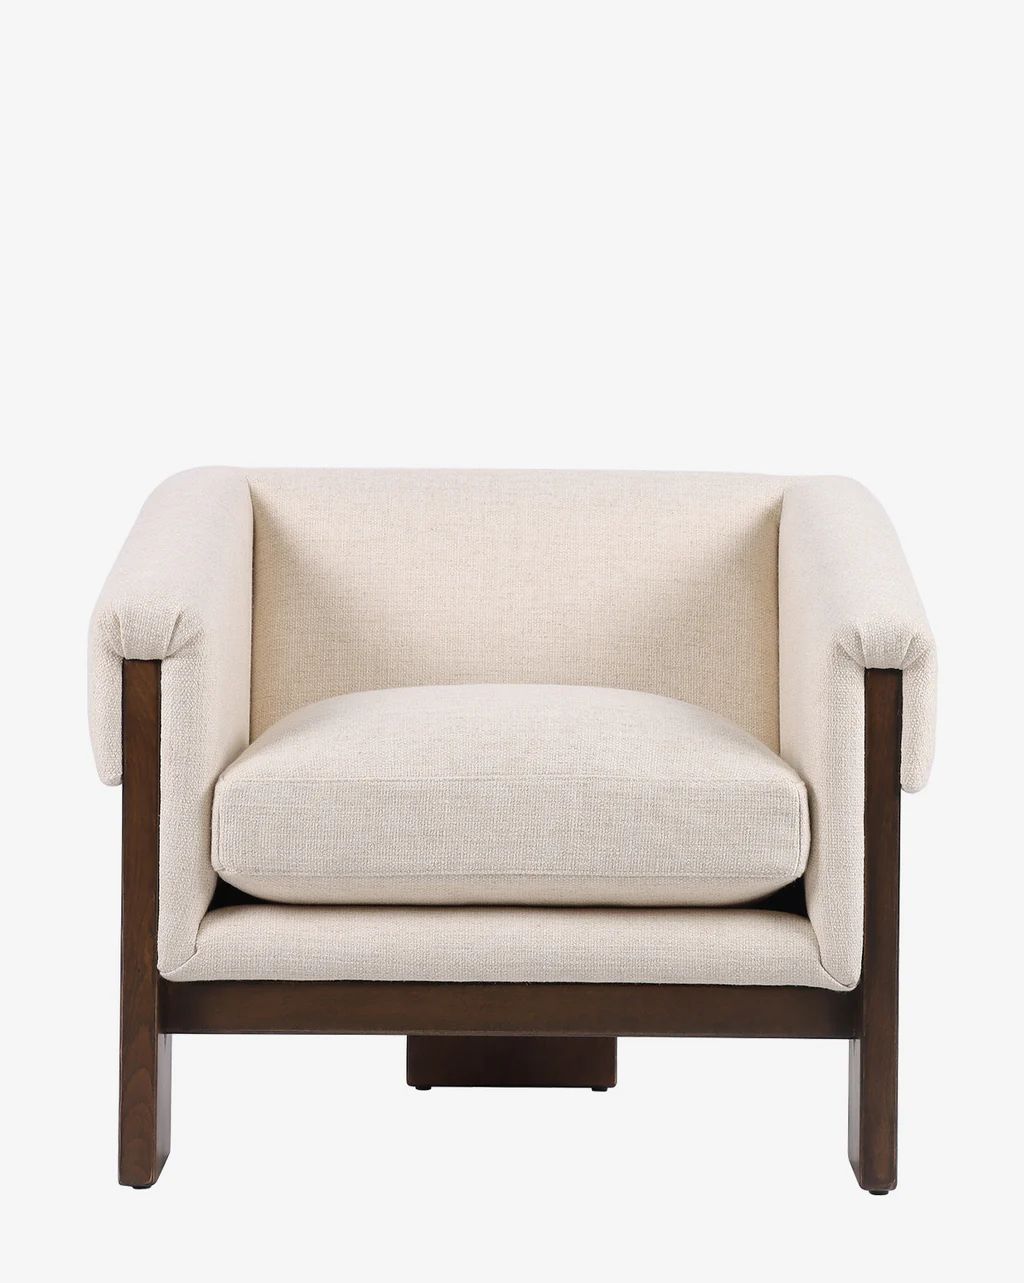 Bethia Lounge Chair | McGee & Co.